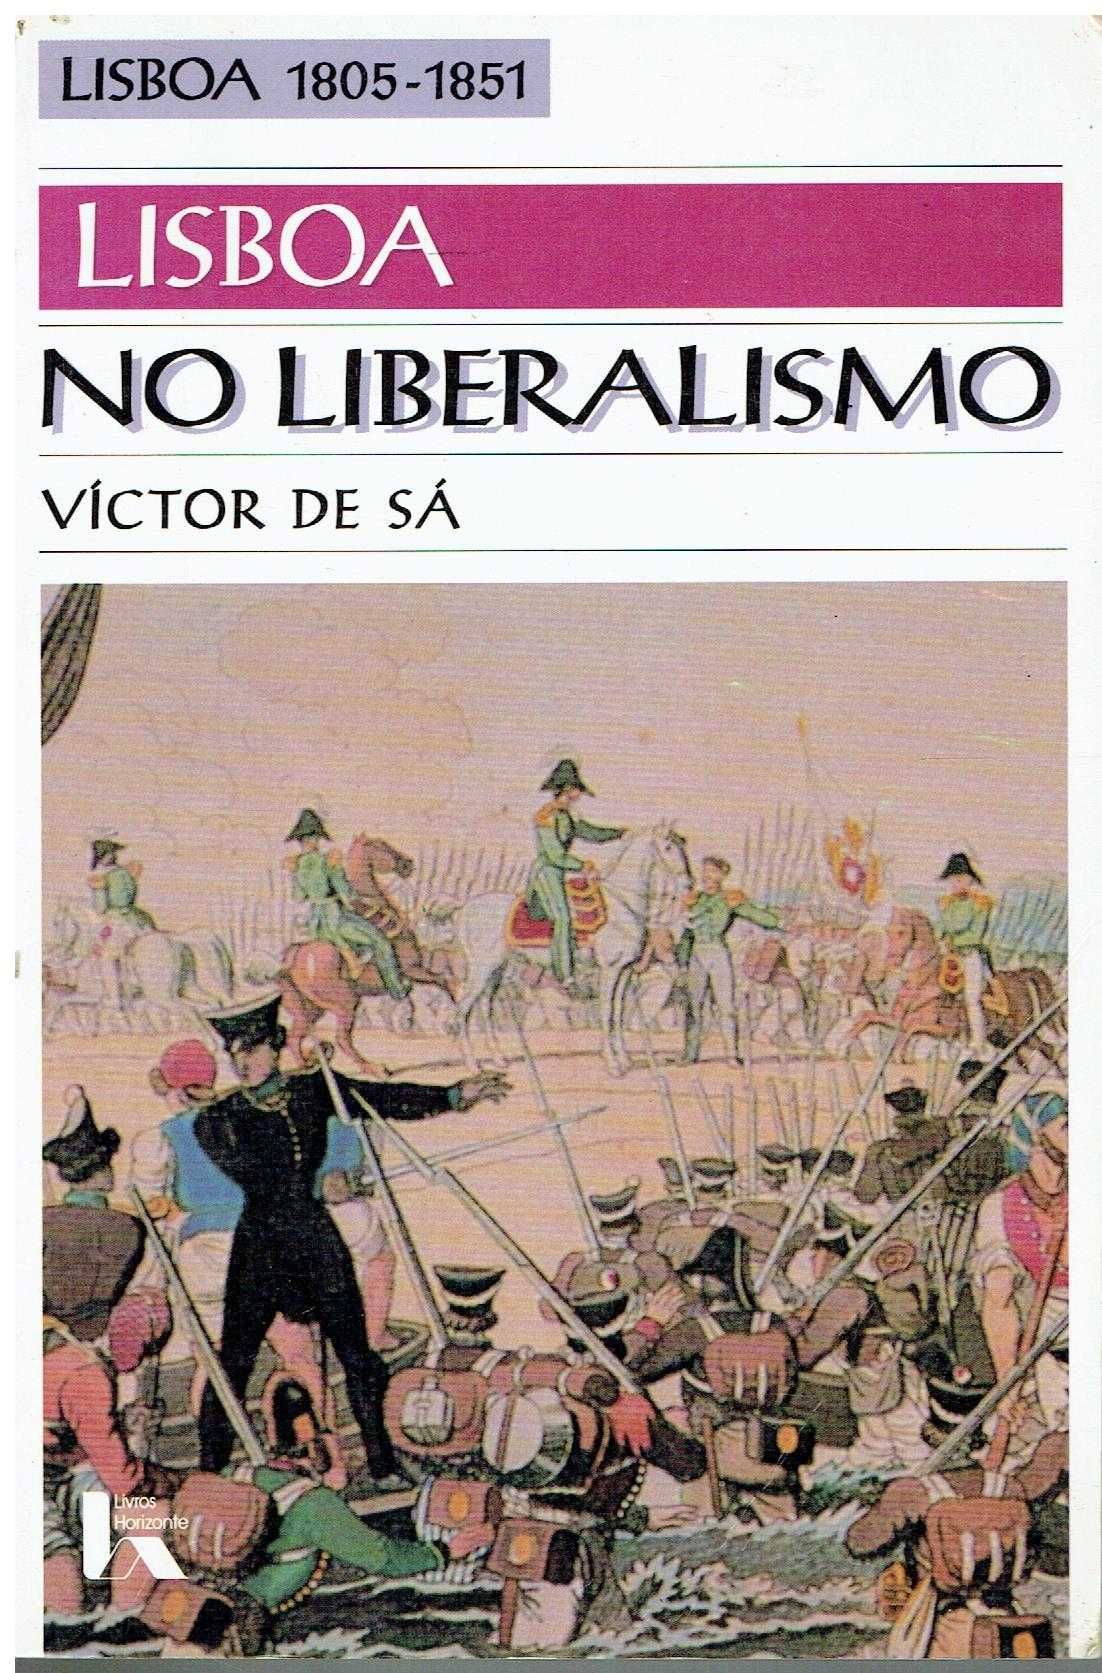 746

Lisboa no liberalismo  
de Victor de Sá.